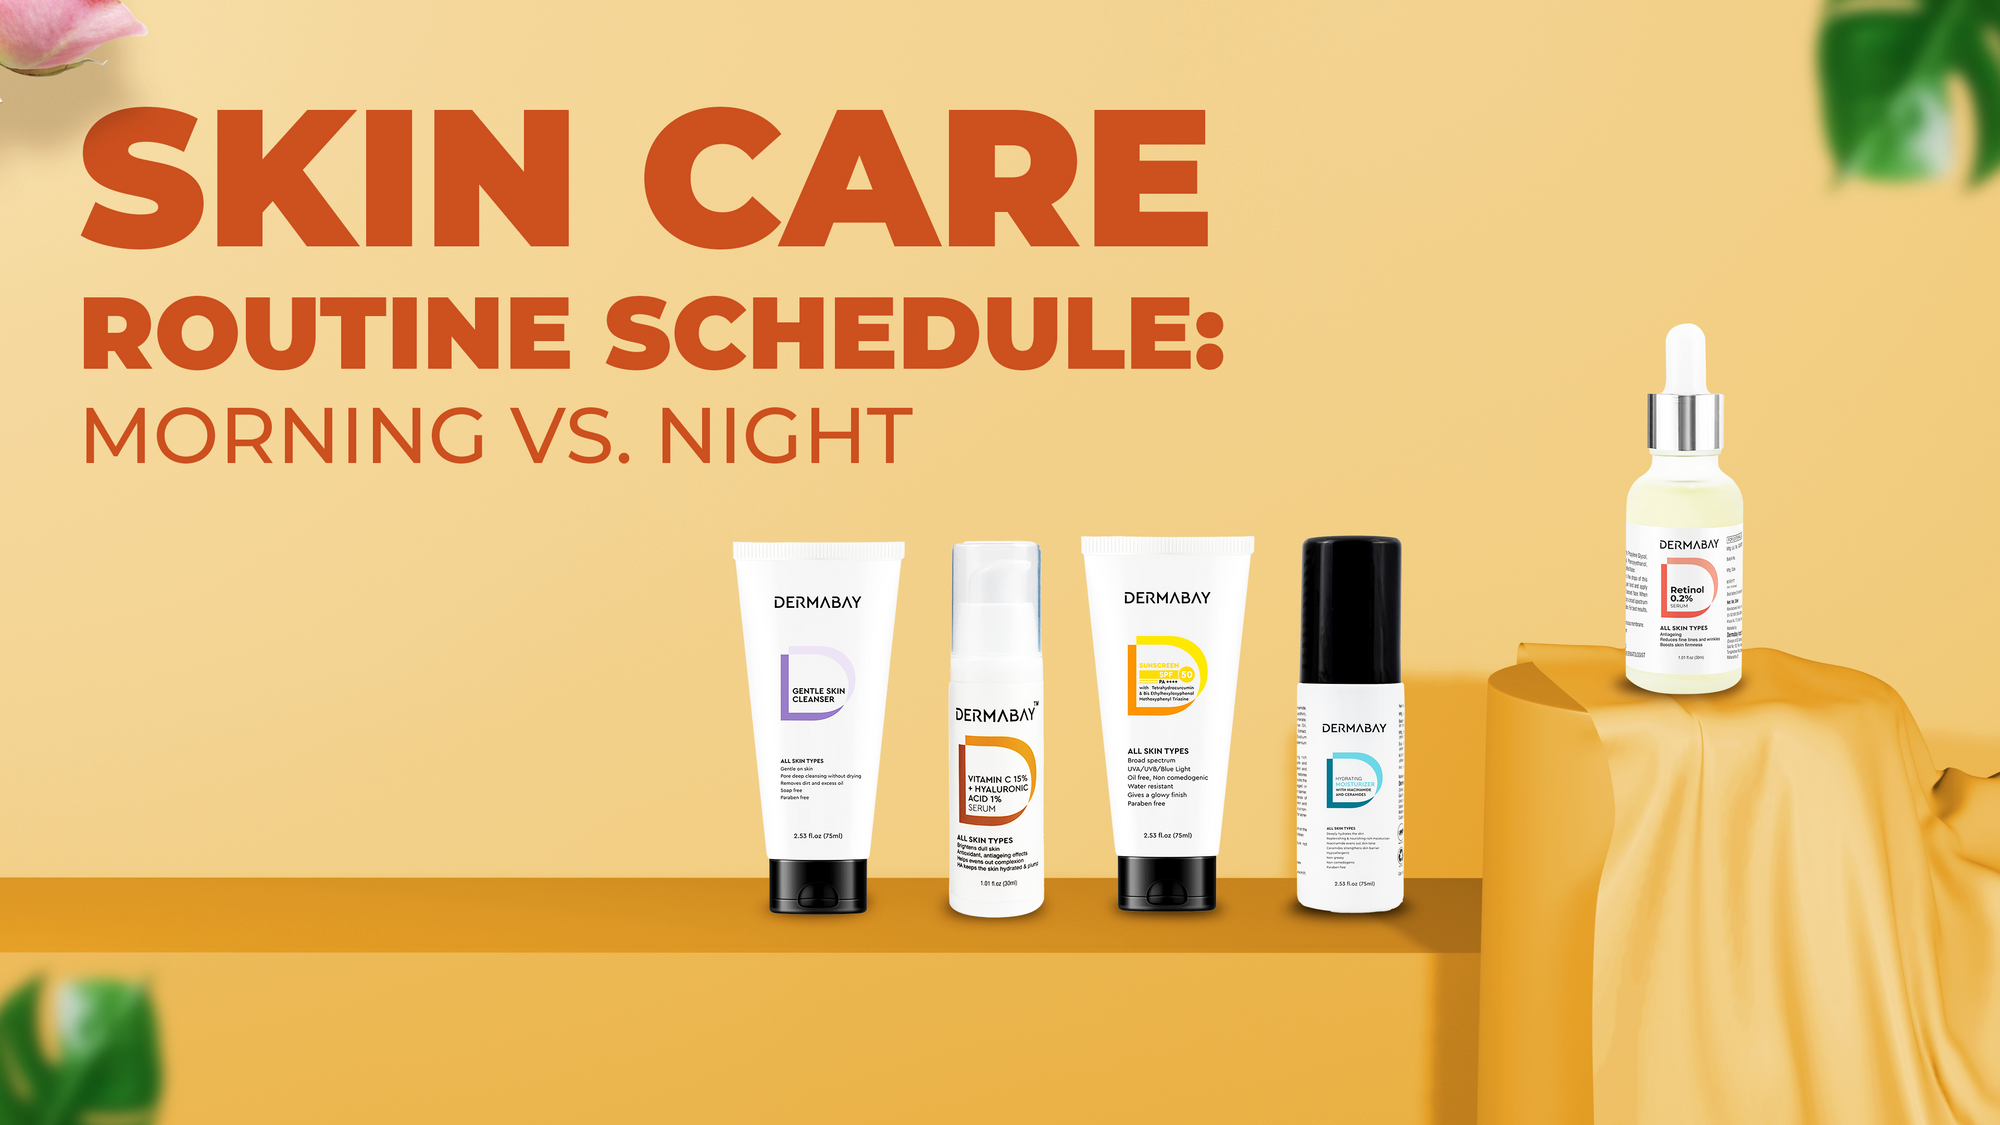 Morning vs night skincare routine